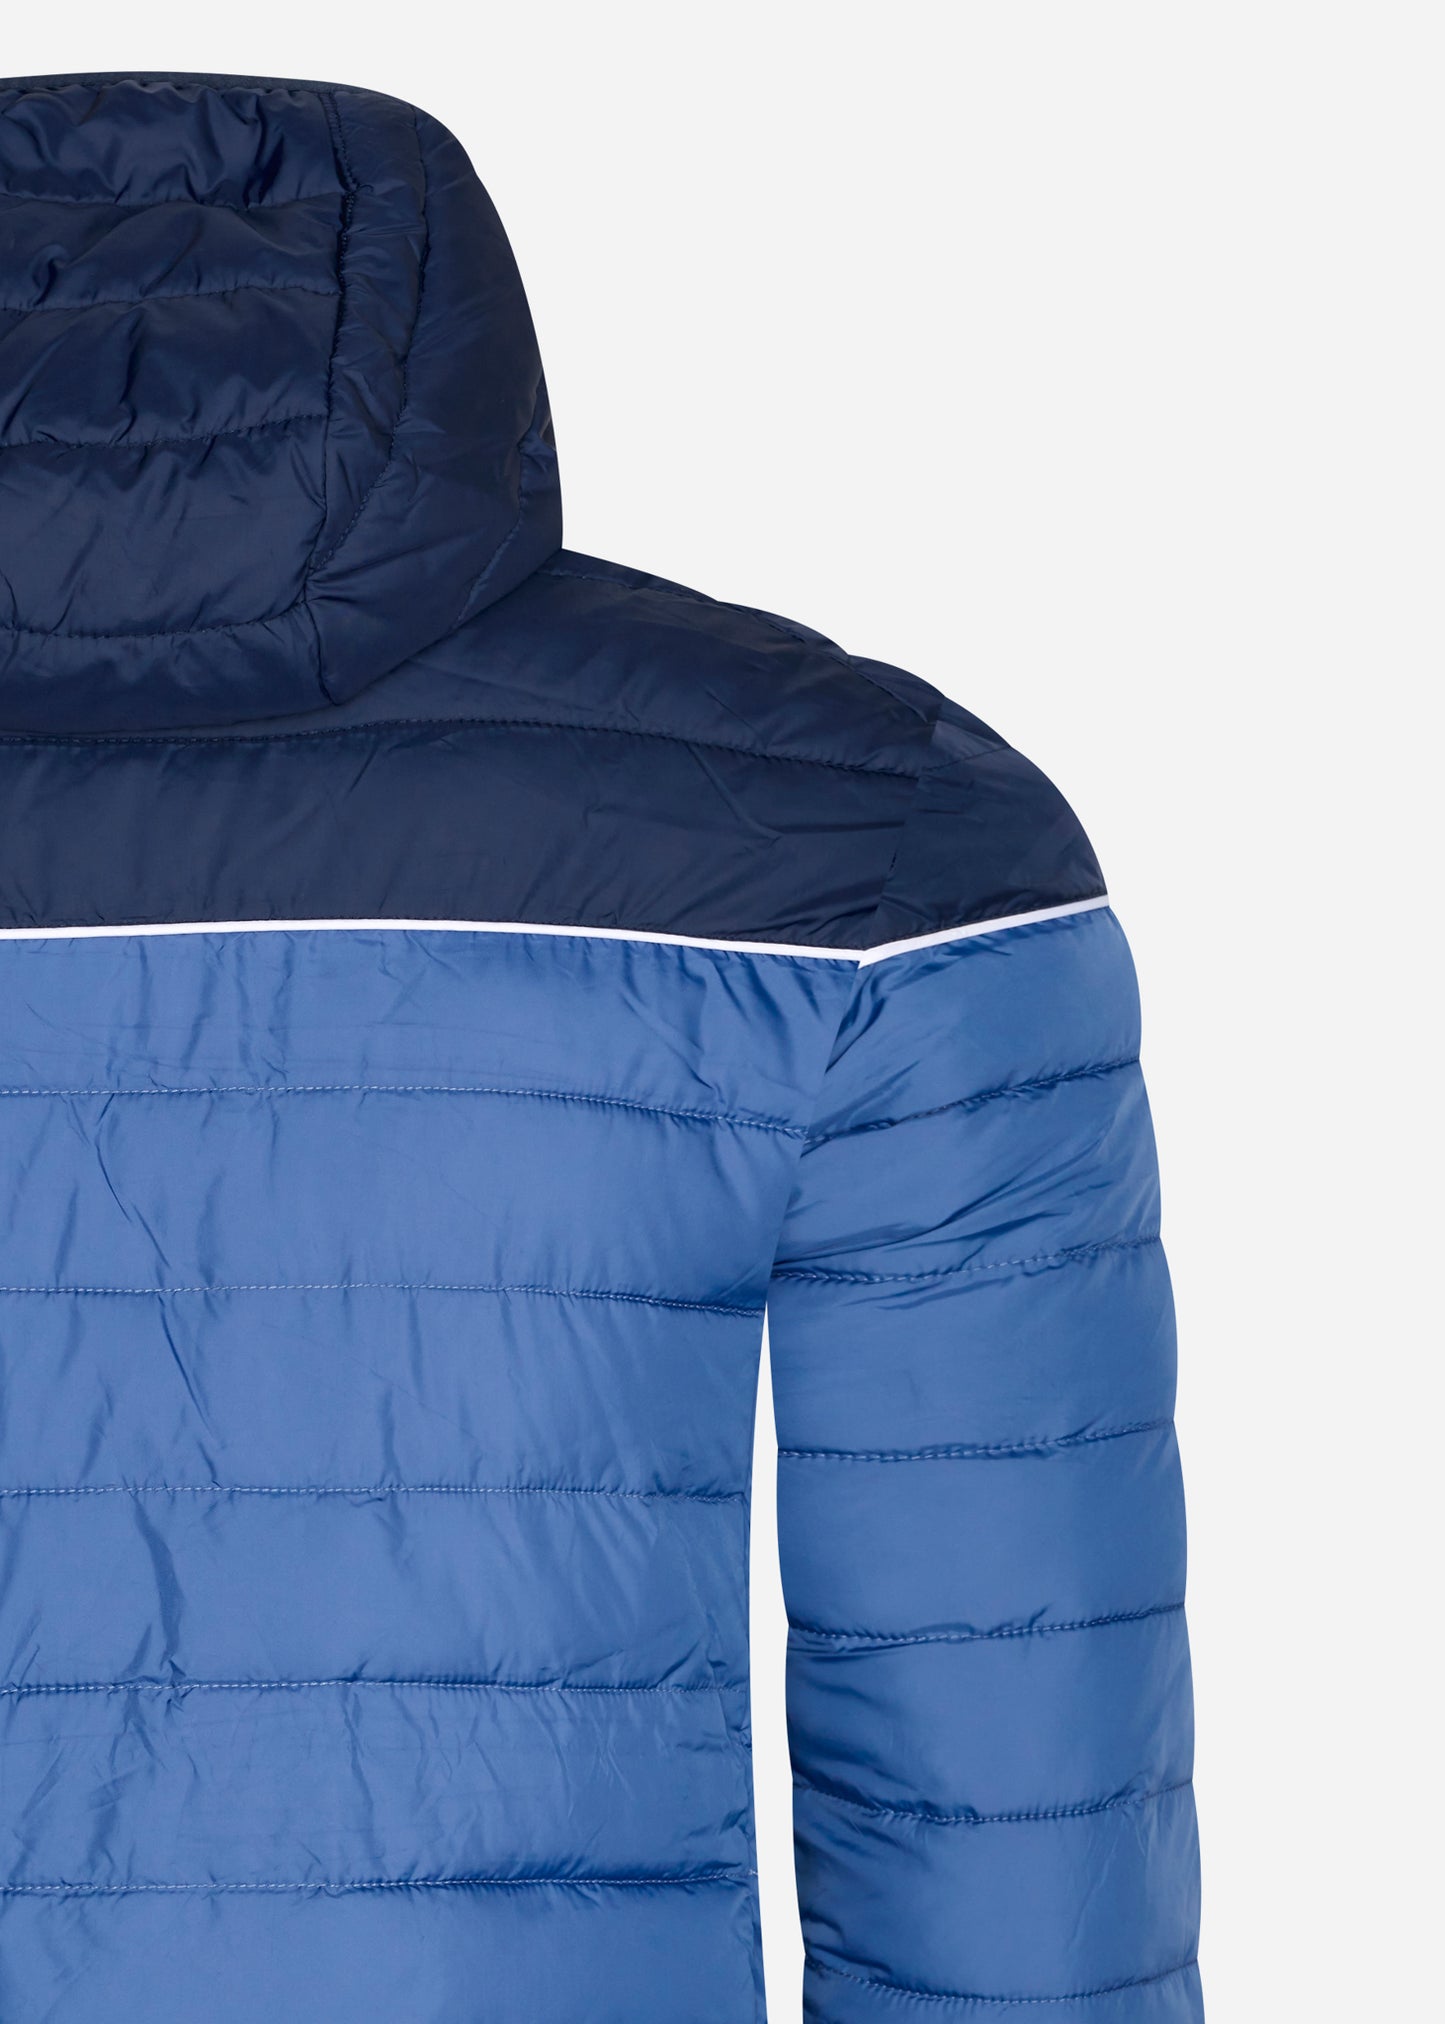 Lombardy 2 padded jacket - blue